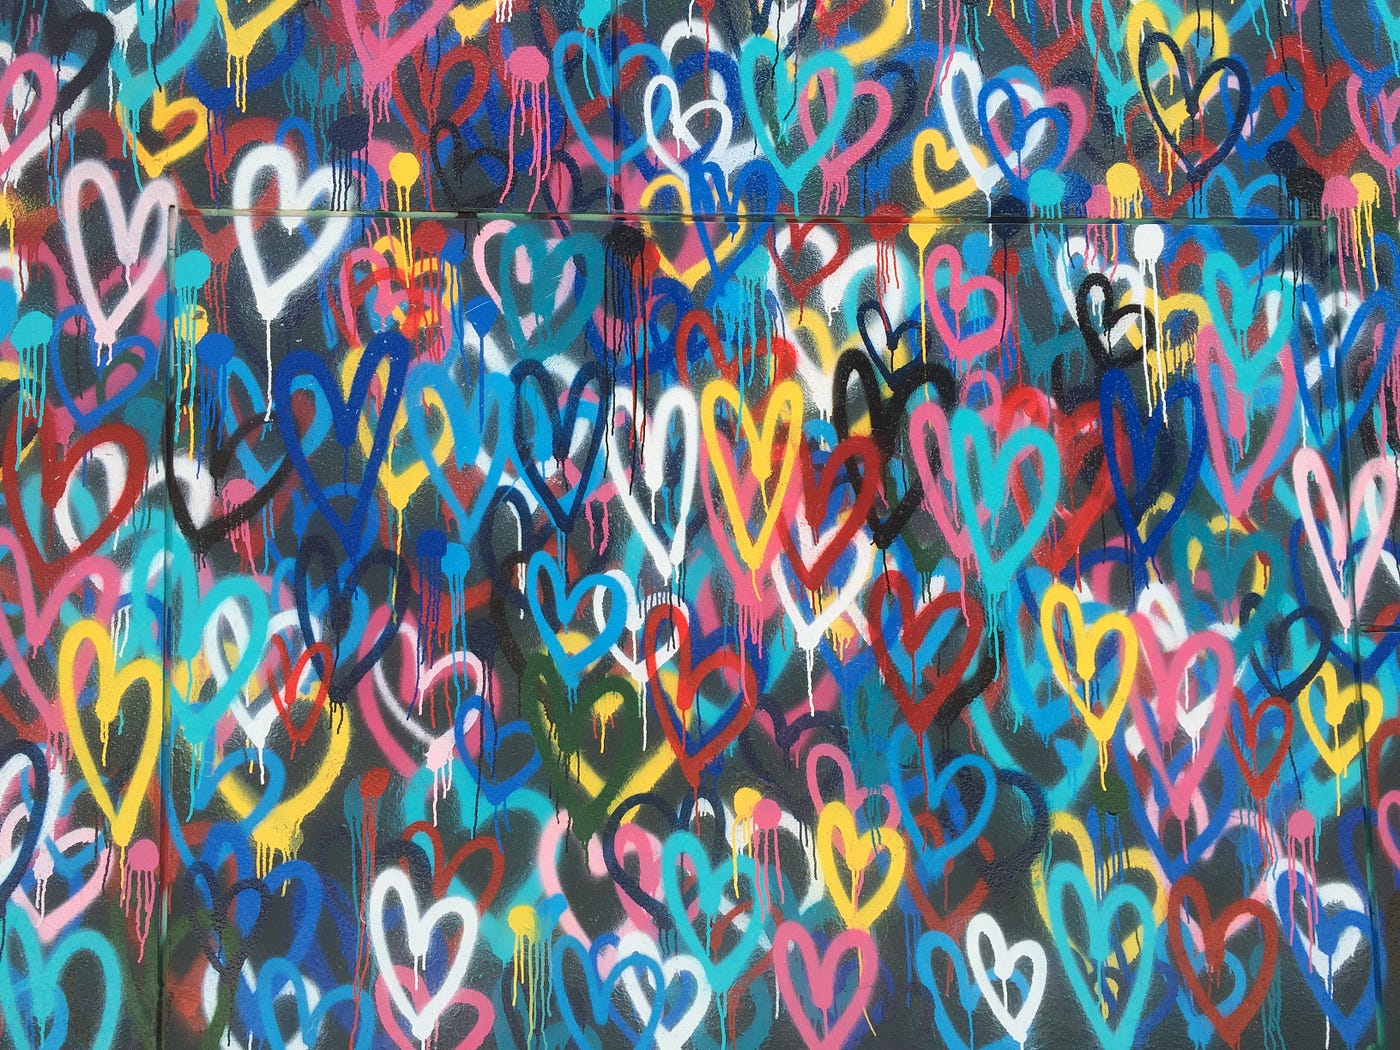 graffiti wallpaper i love you